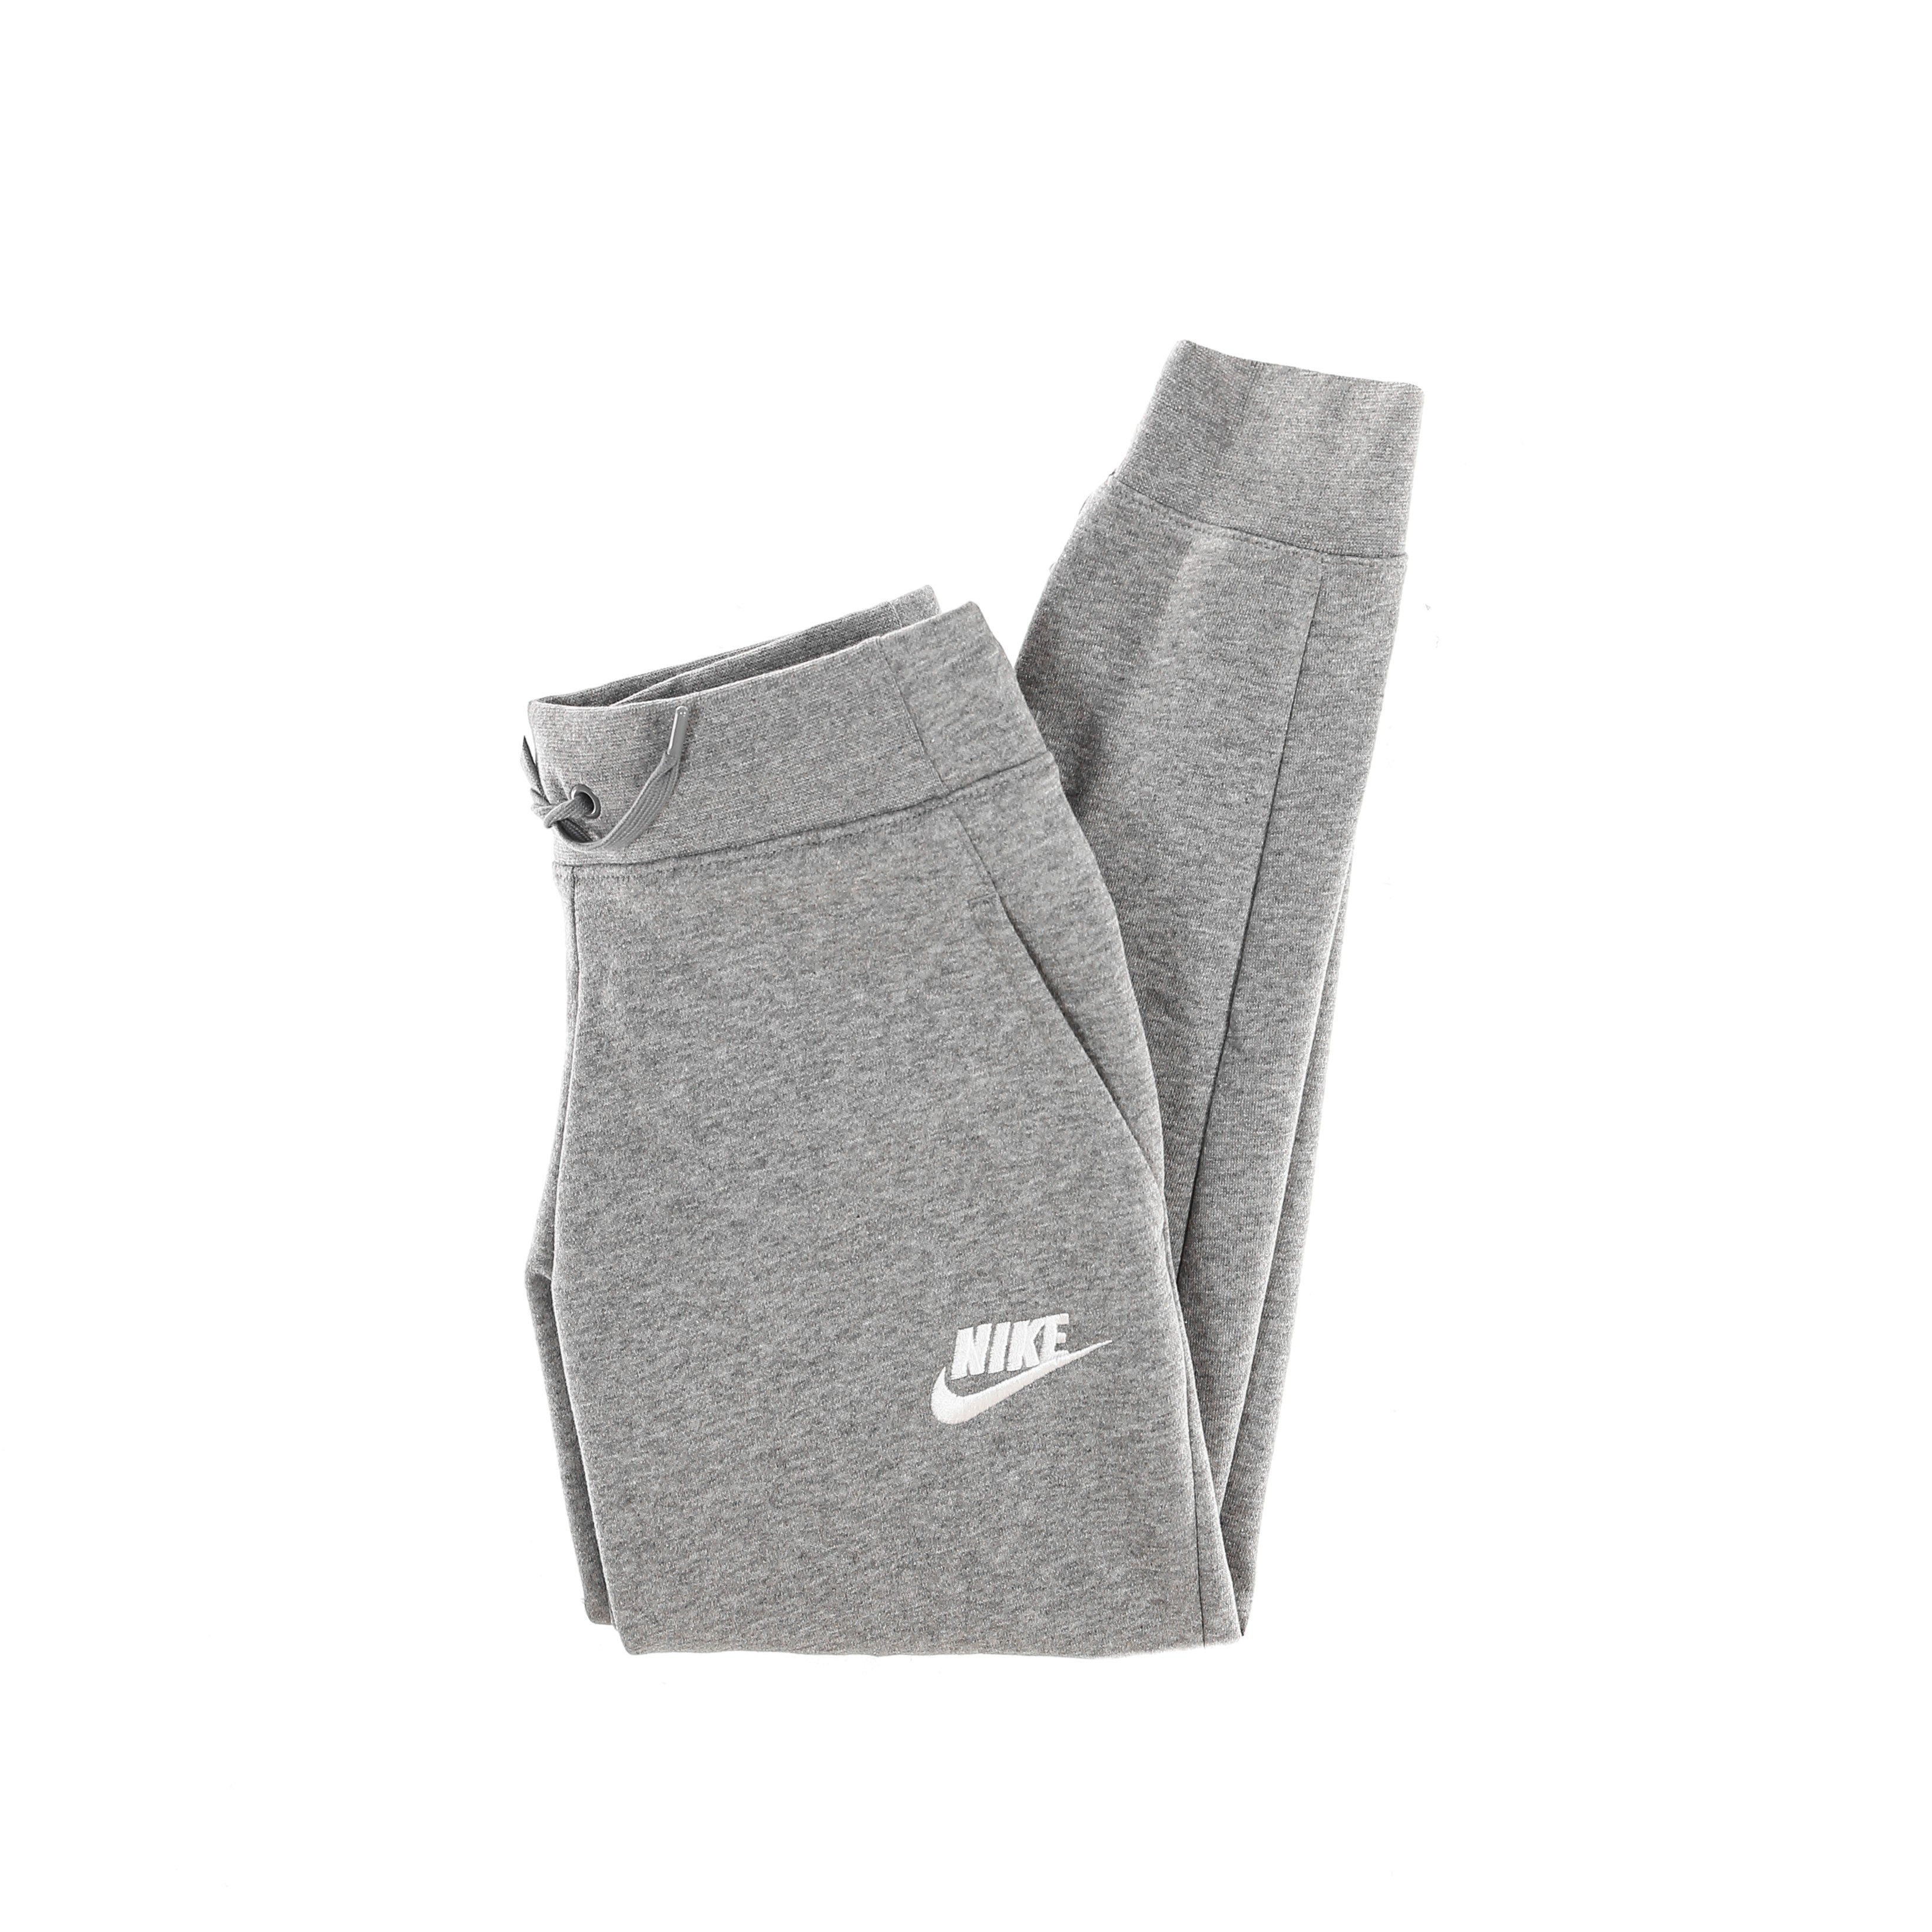 Nike, Pantalone Tuta Felpato Ragazza Sportswear Pant, Carbon Heather/white